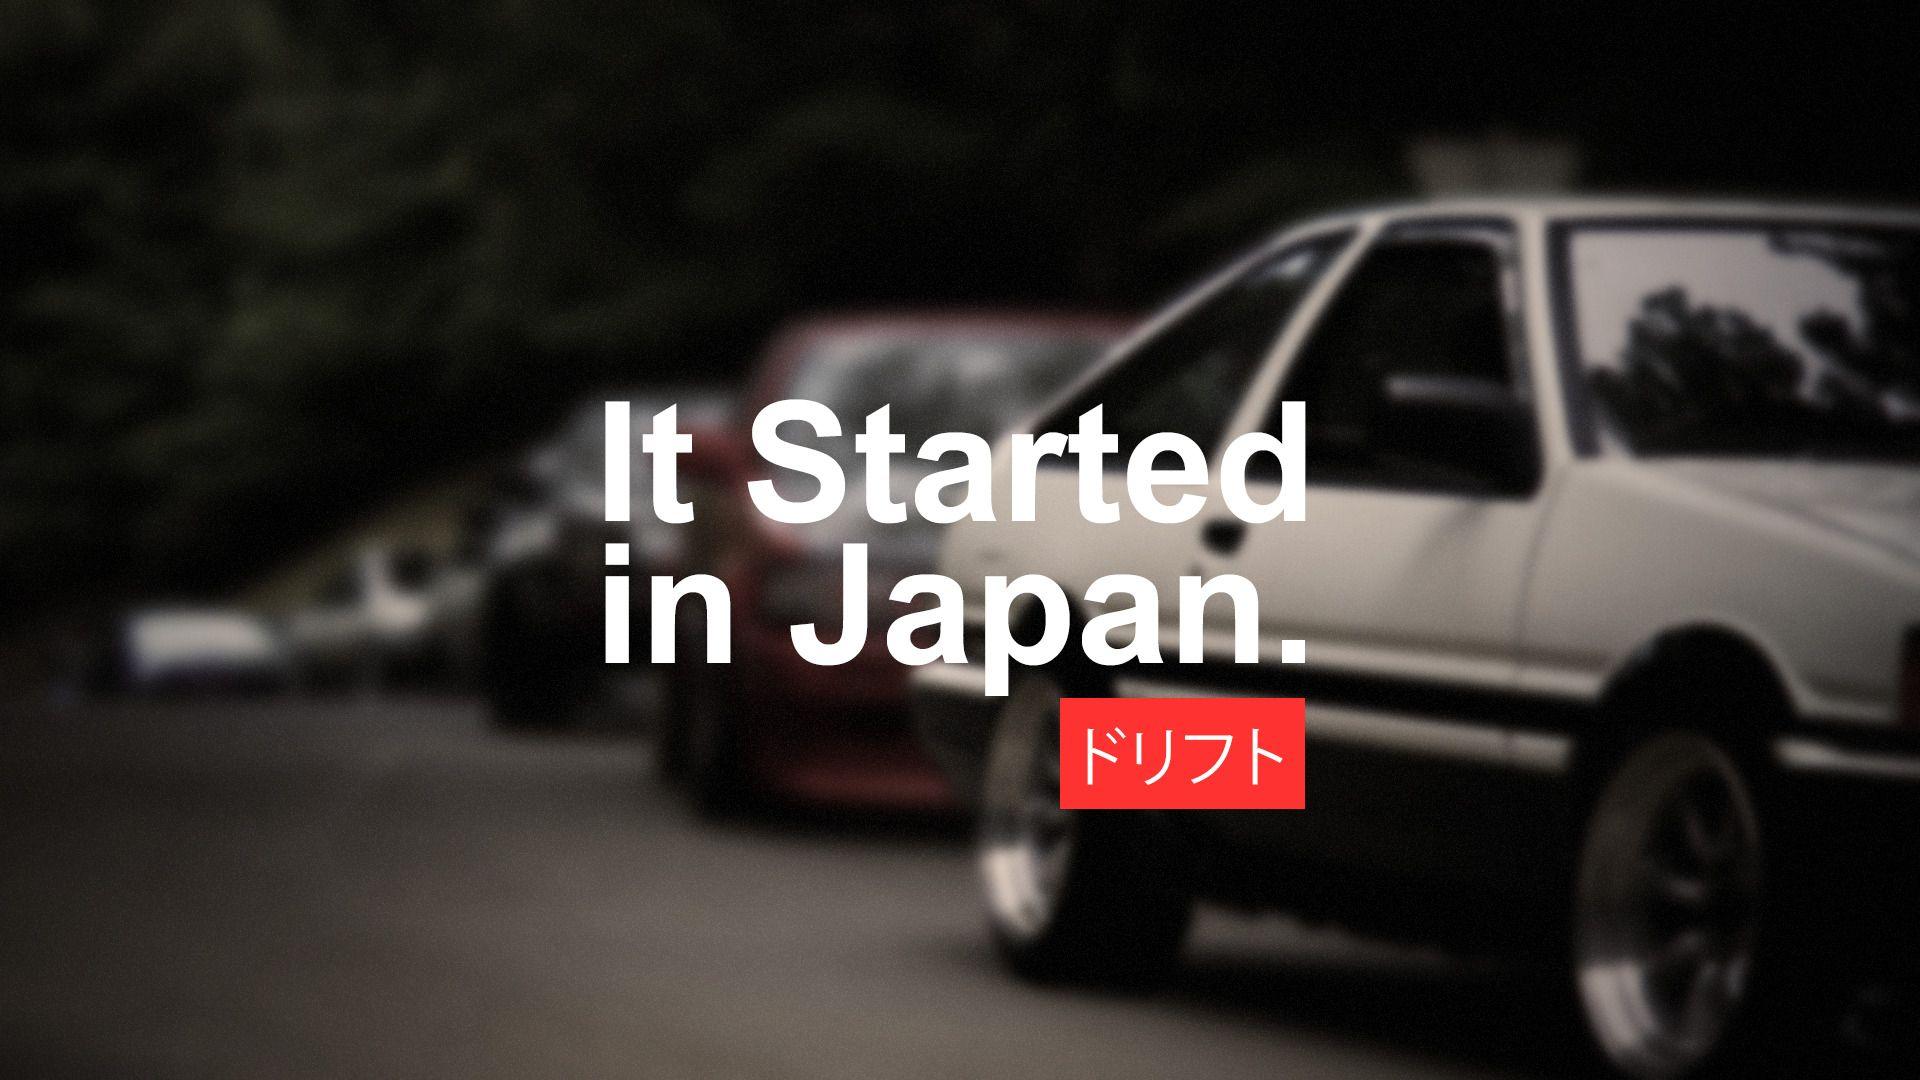 car, Japan, Drift, Drifting, Racing, Vehicle, Japanese Cars, Import